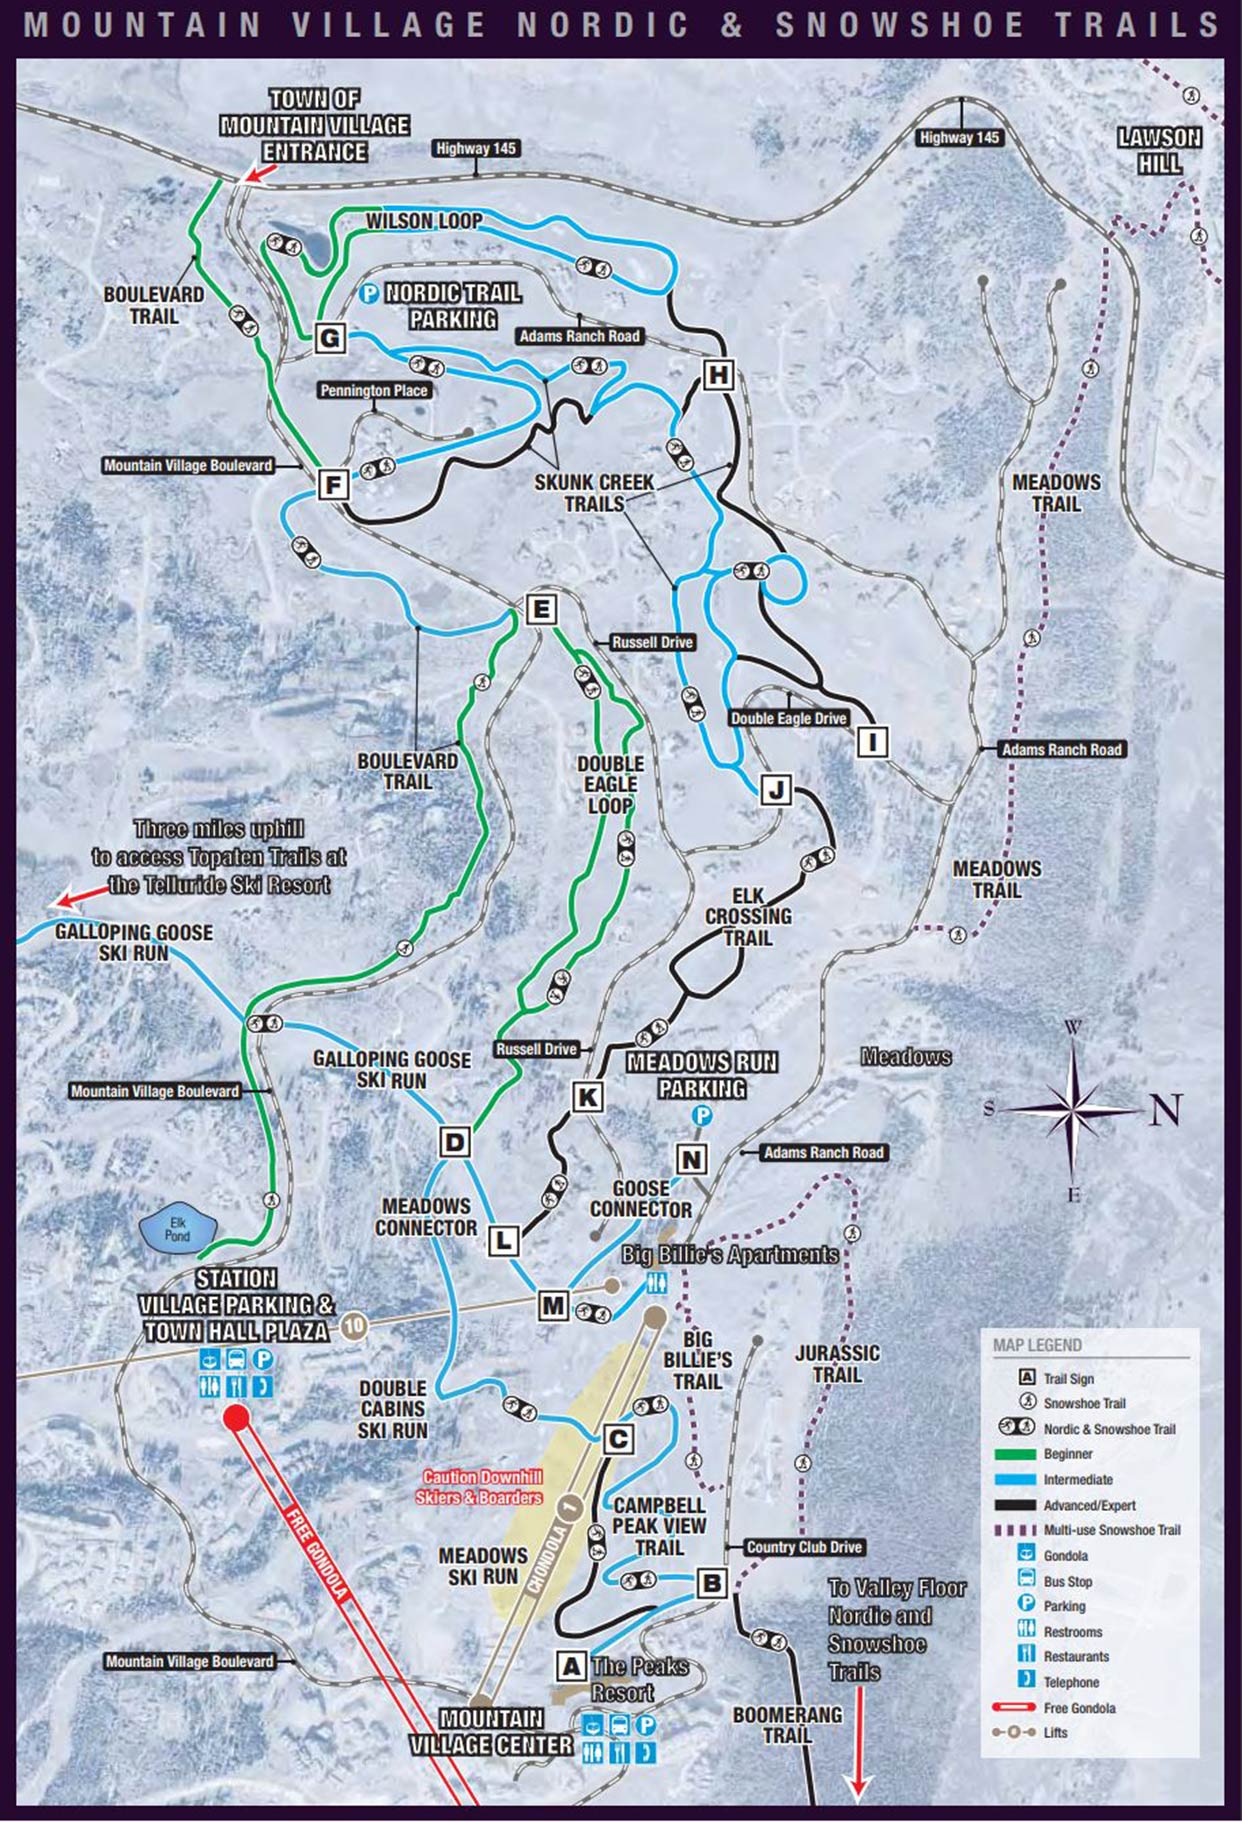 TOMV Nordic & Snowshoe Trail Map